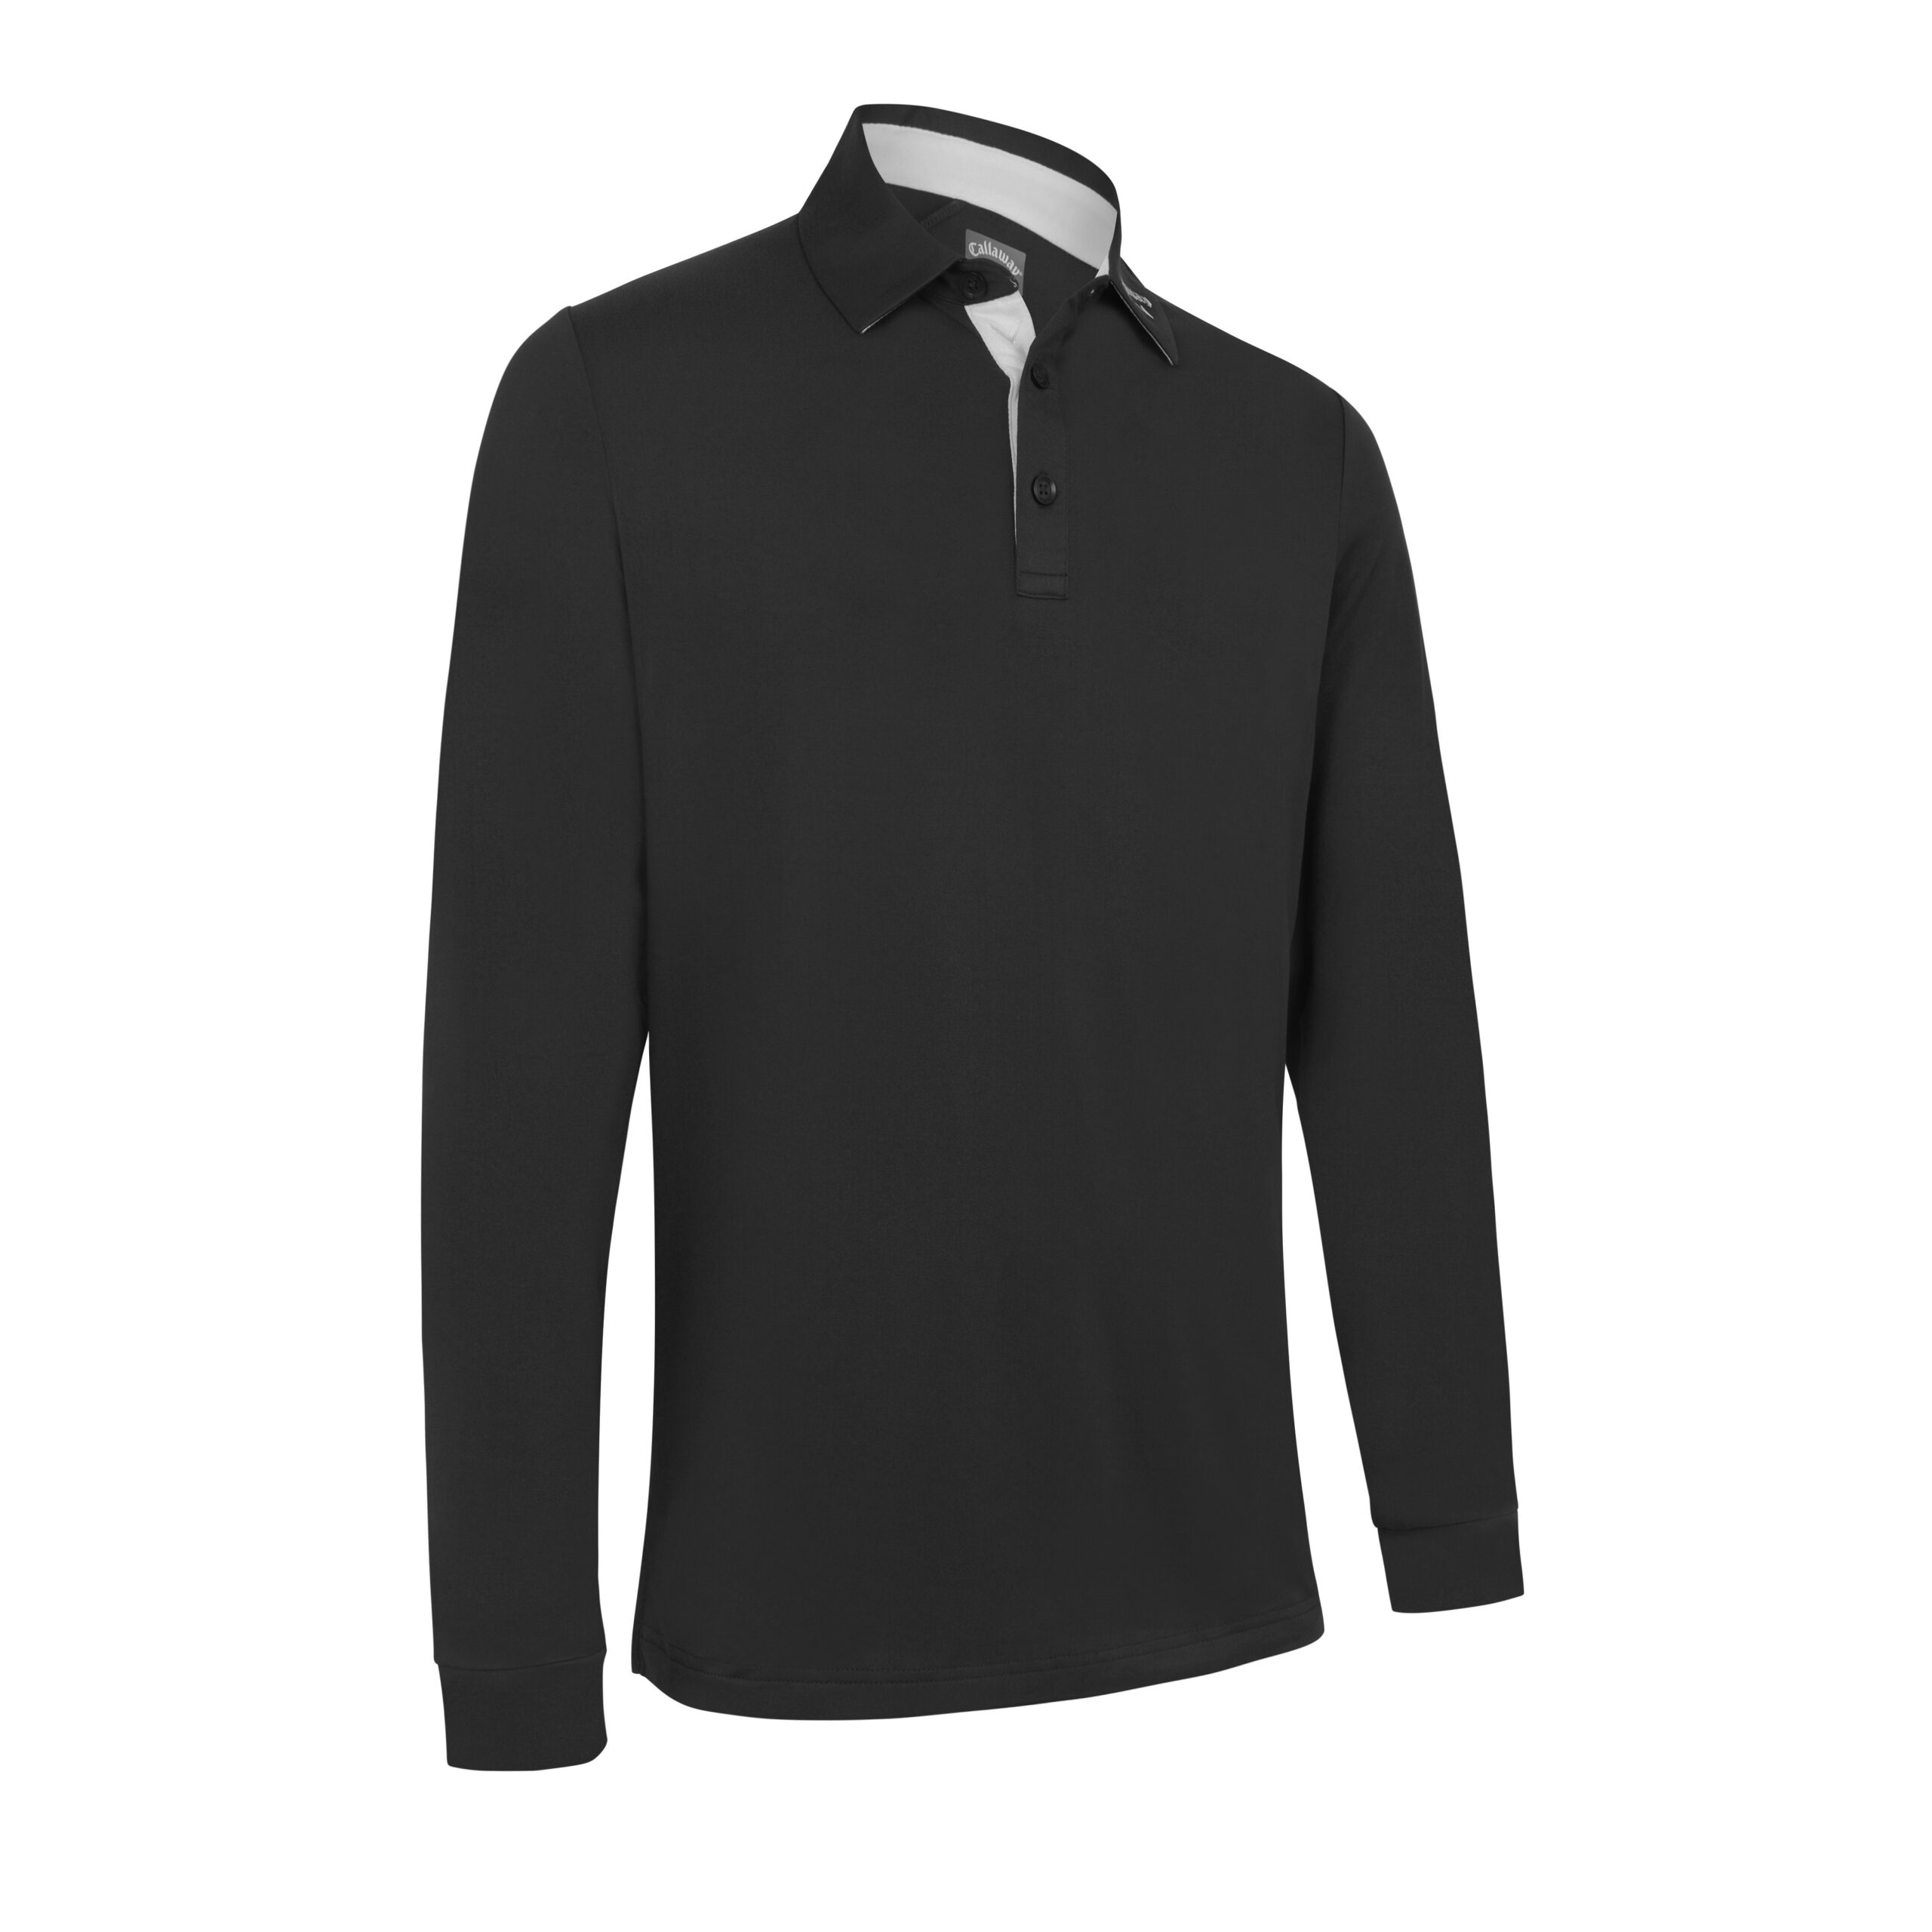 Callaway Performance pánské golfové triko s dlouhým rukávem, černé, vel. XXL